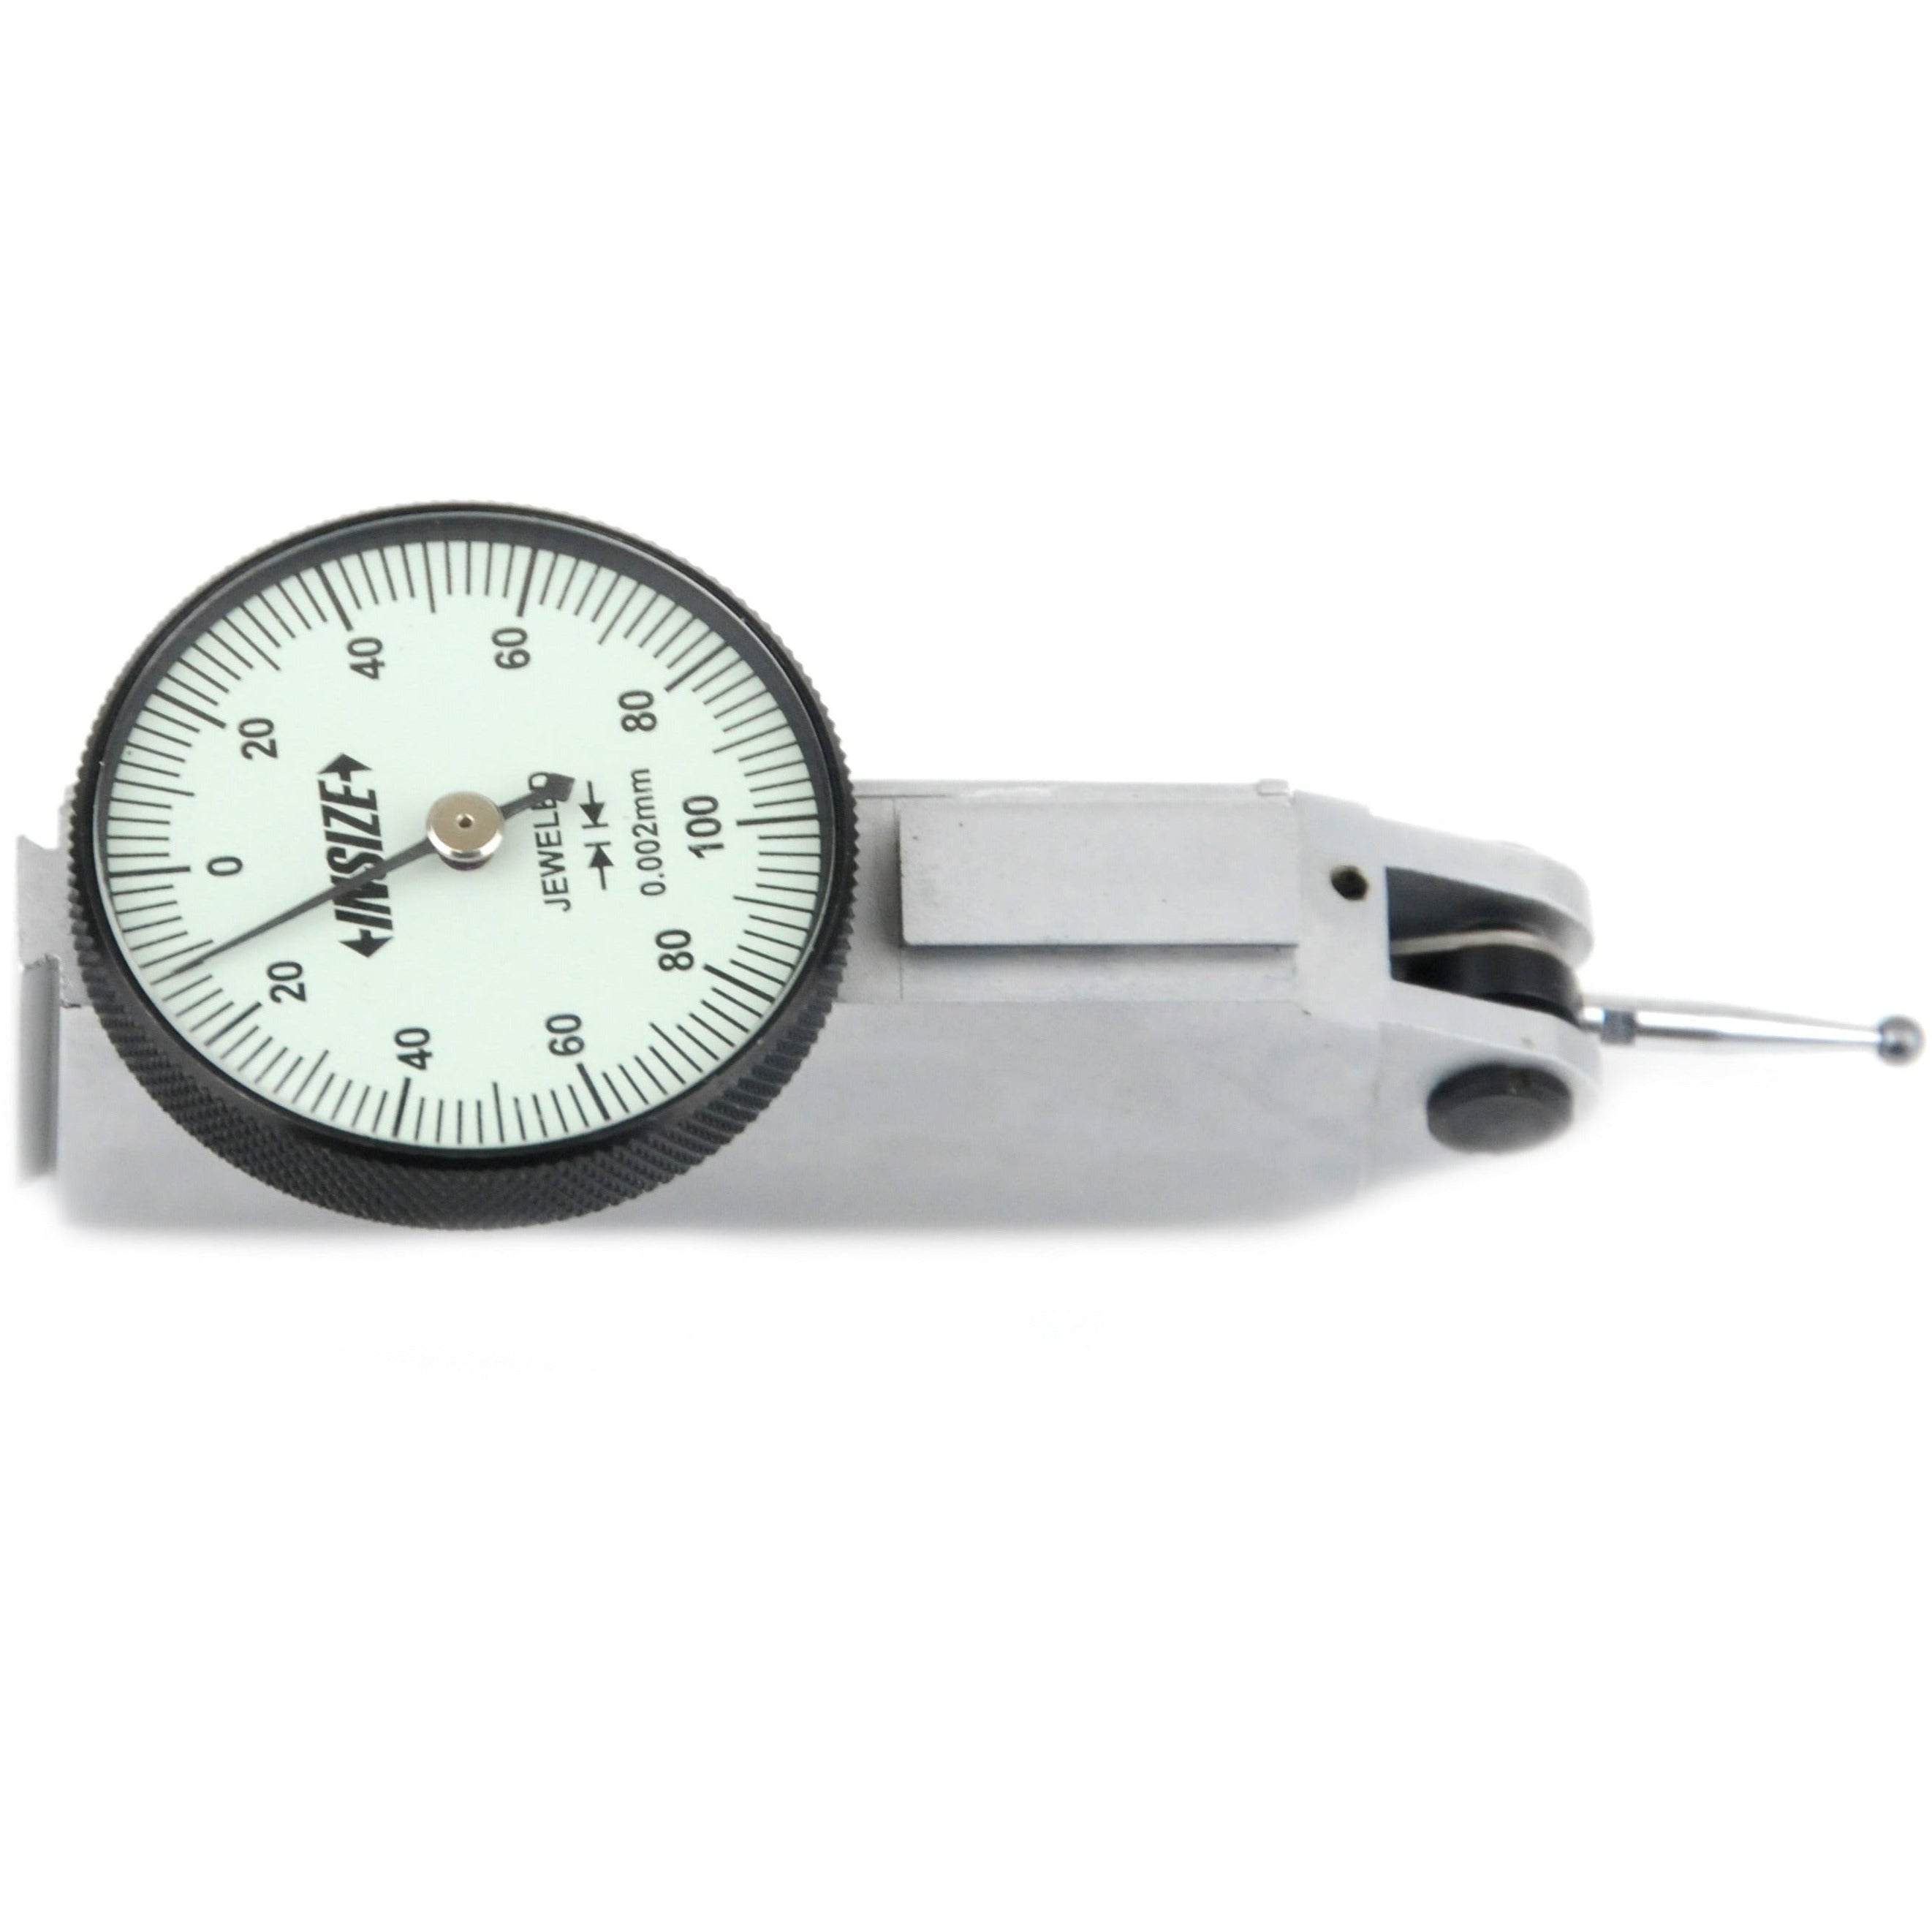 Insize Metric Dial Indicator 0.2 mm Range Series 2380-02